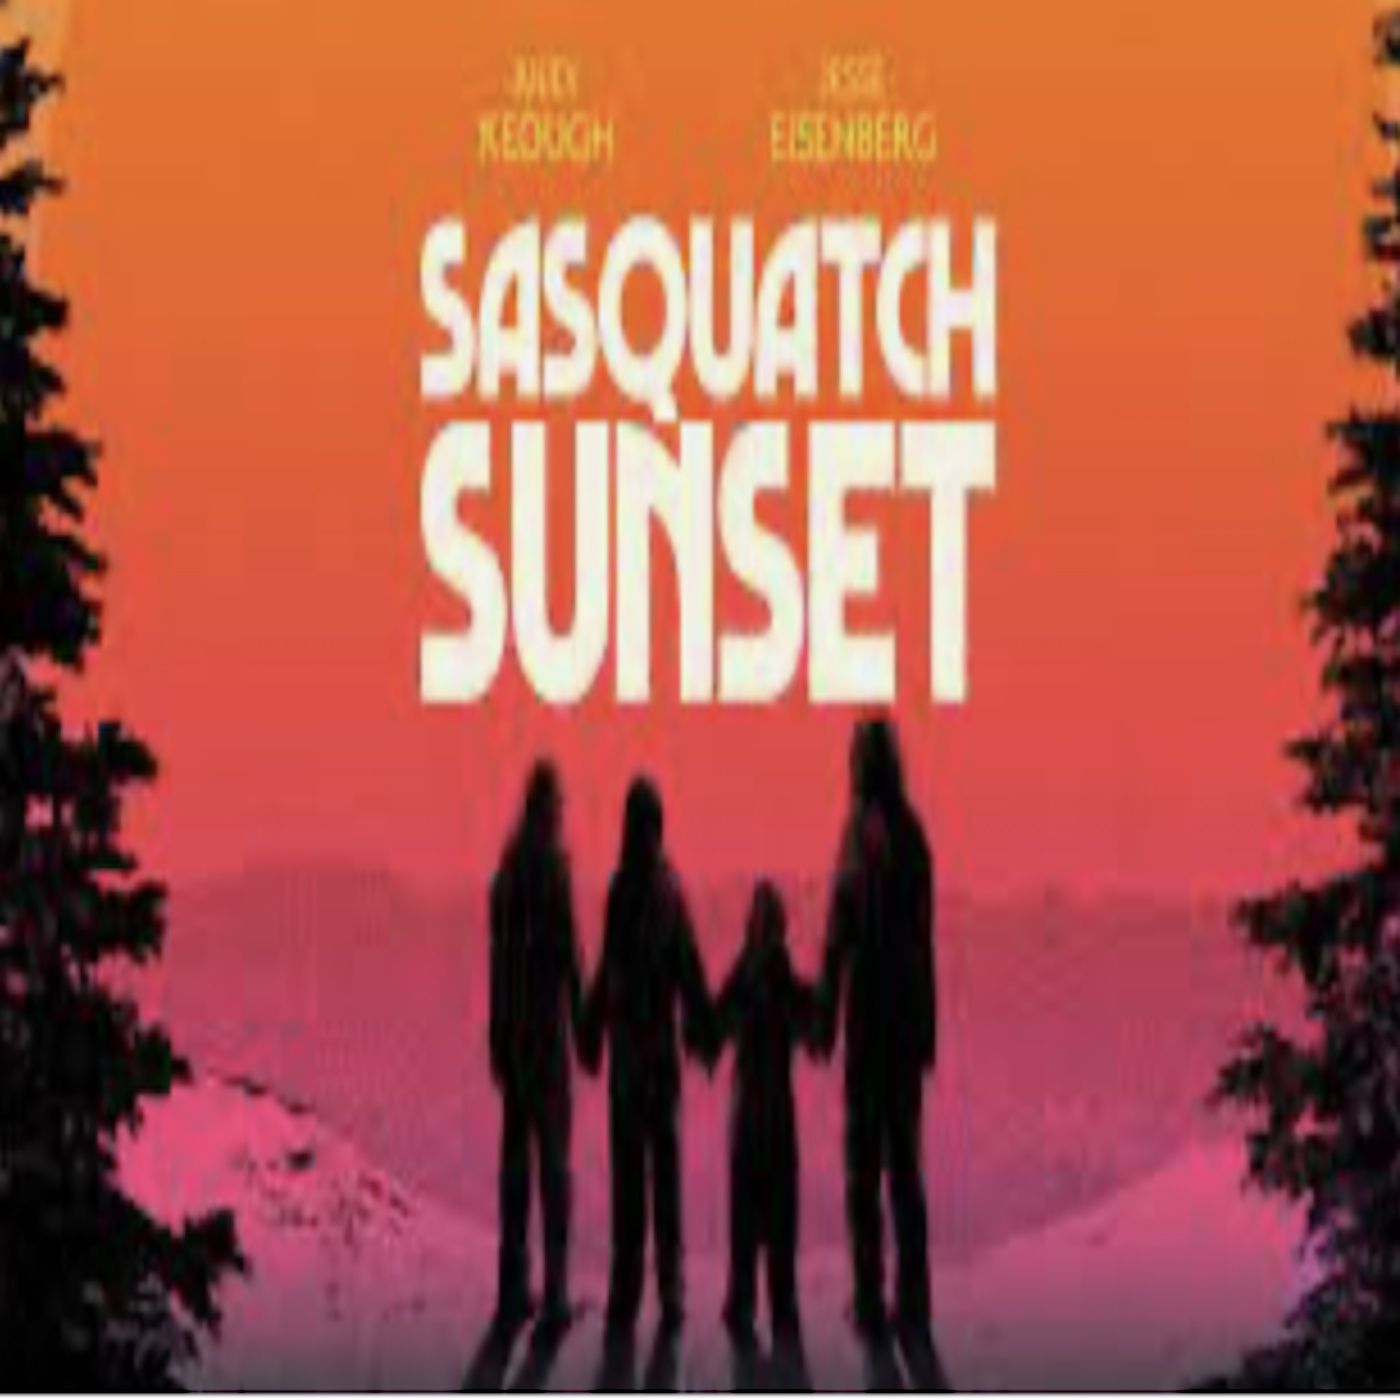 SO EP:442 Sasquatch Sunset